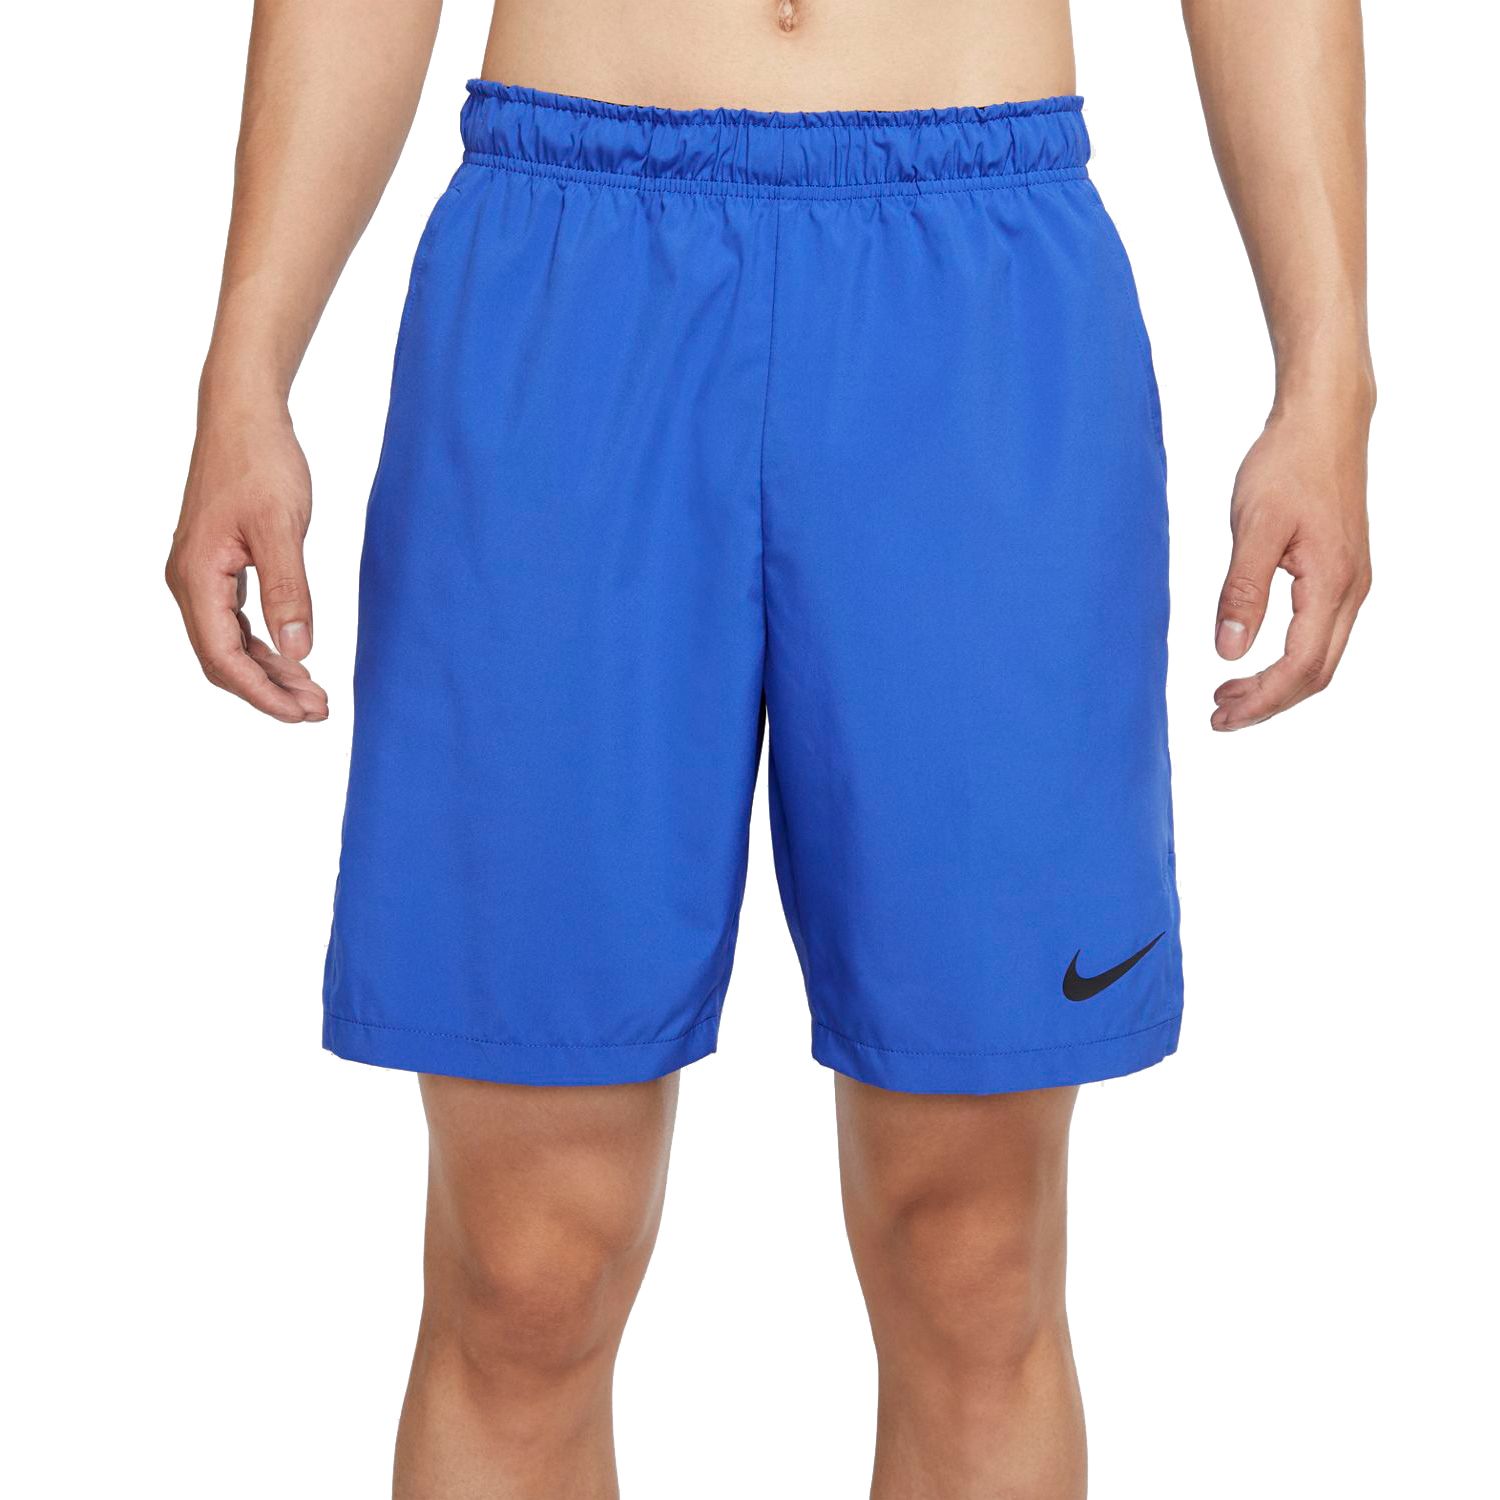 Шорты Nike синие. Продажа мужские шорты Nike Flex Training short. Шорты екатеринбург